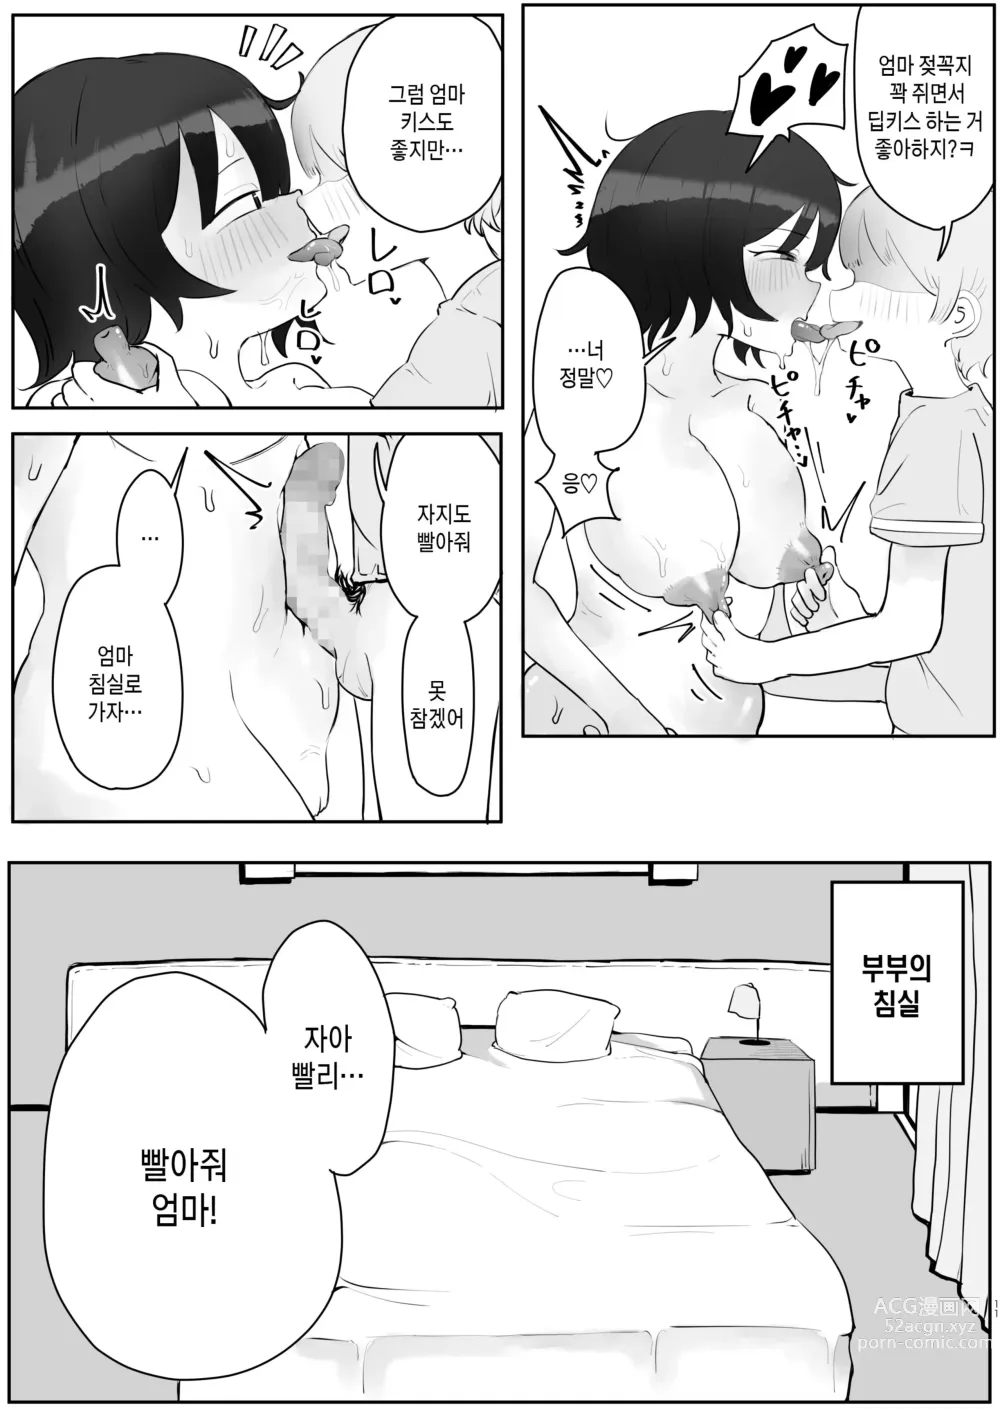 Page 11 of doujinshi 아들의 거근에 유혹되어 매일 땀범벅 섹스해 버리는 엄마의 이야기 2-3